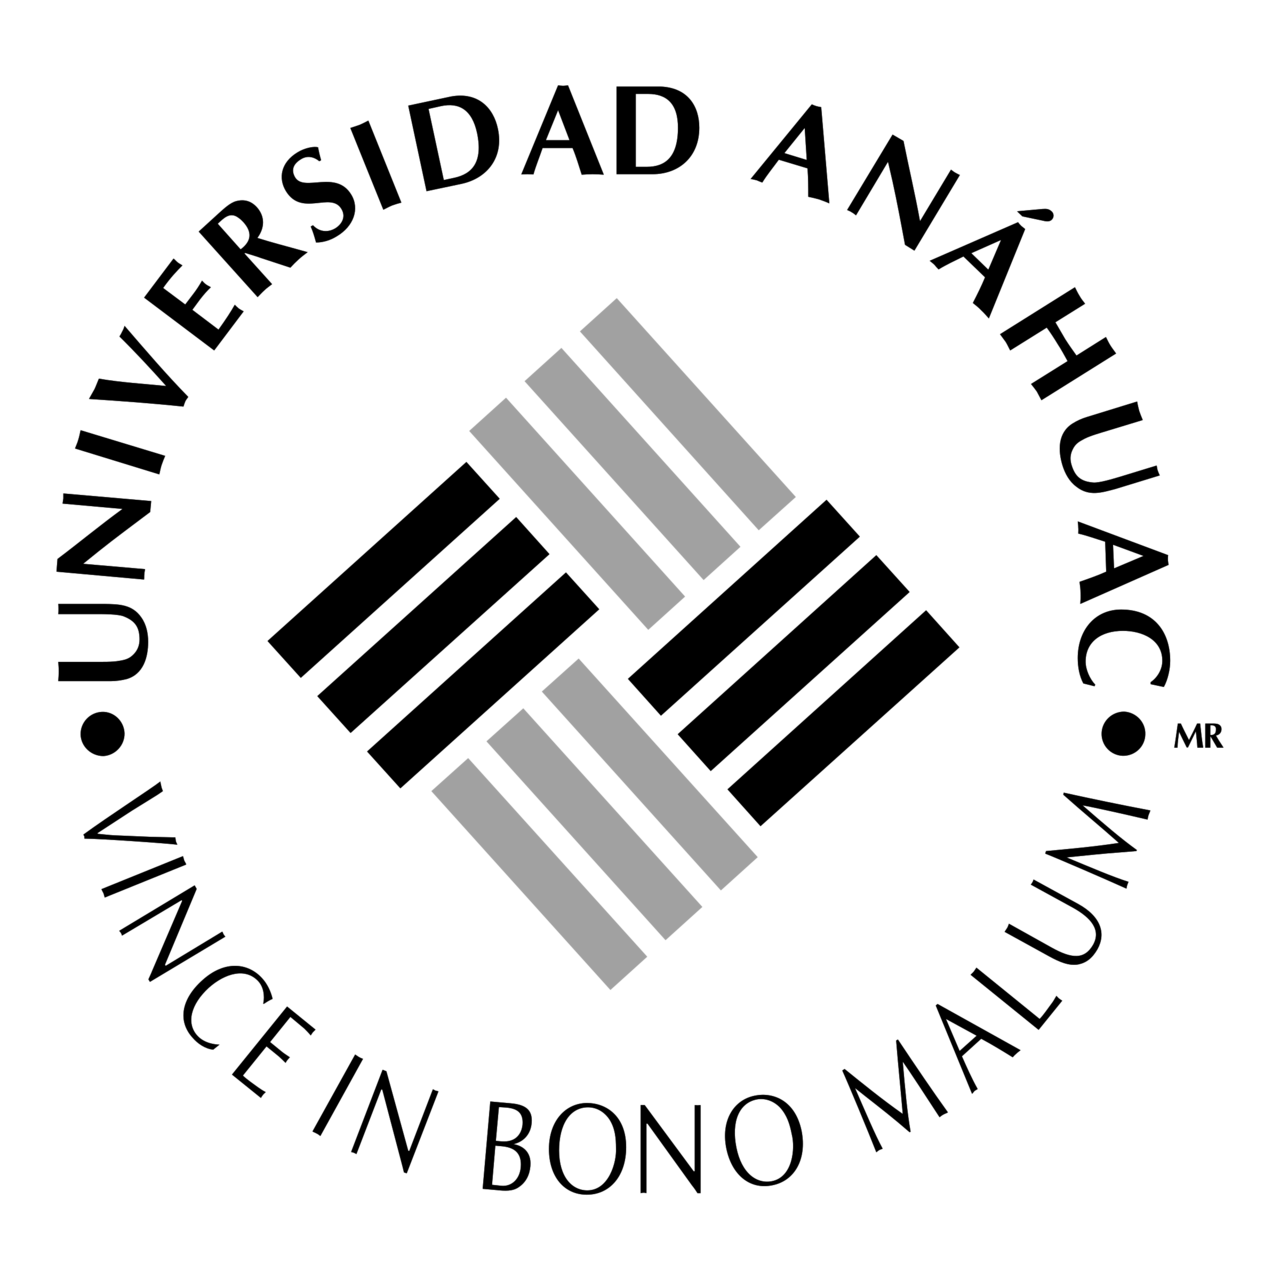 universidad-anahuac-logo-black-and-white